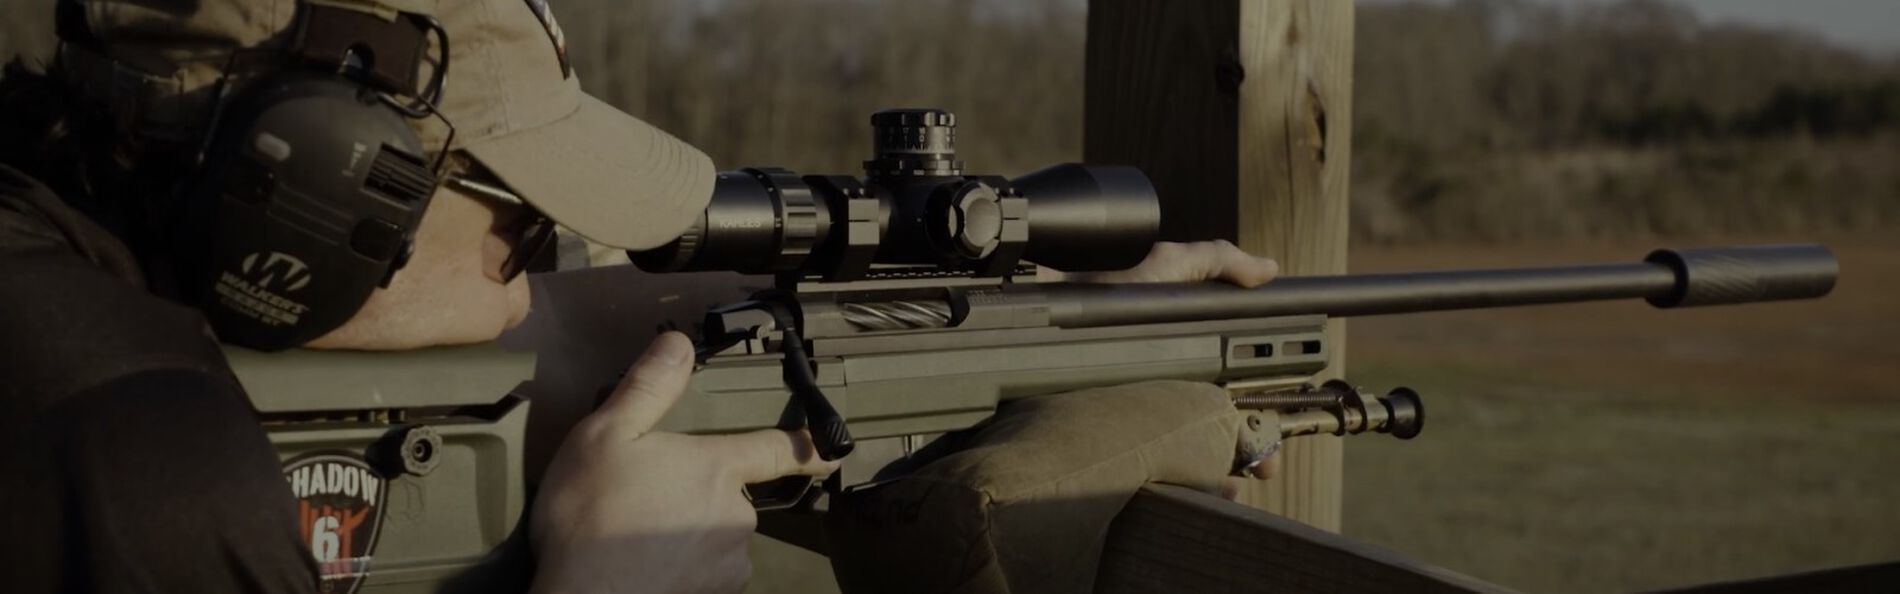 Jim Gilliland shooting a rifle at an outdoor range